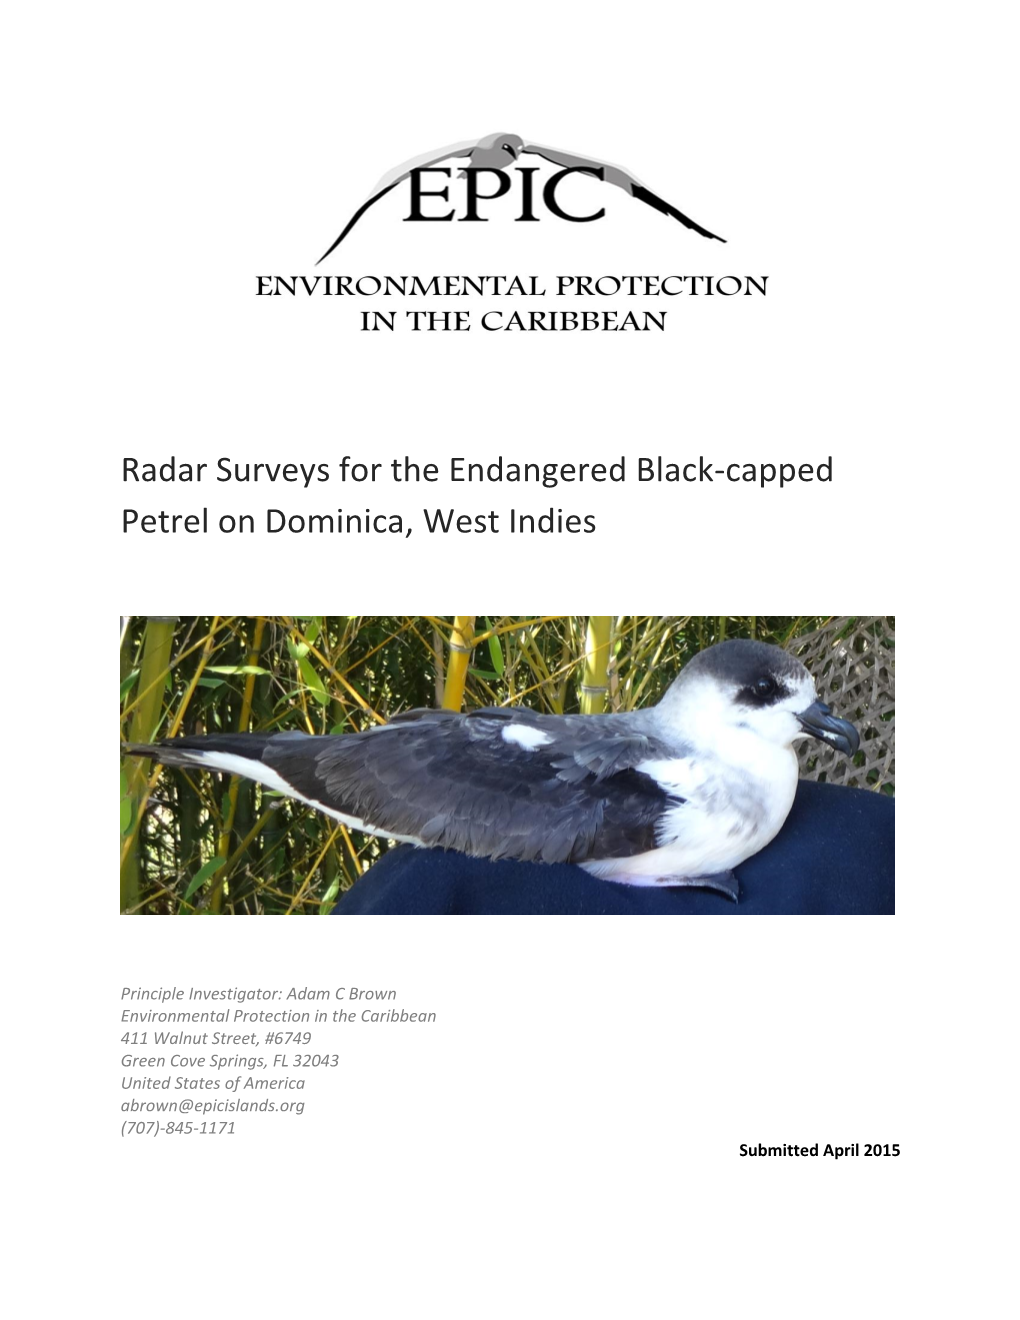 Radar Surveys for the Endangered Black-Capped Petrel on Dominica, West Indies